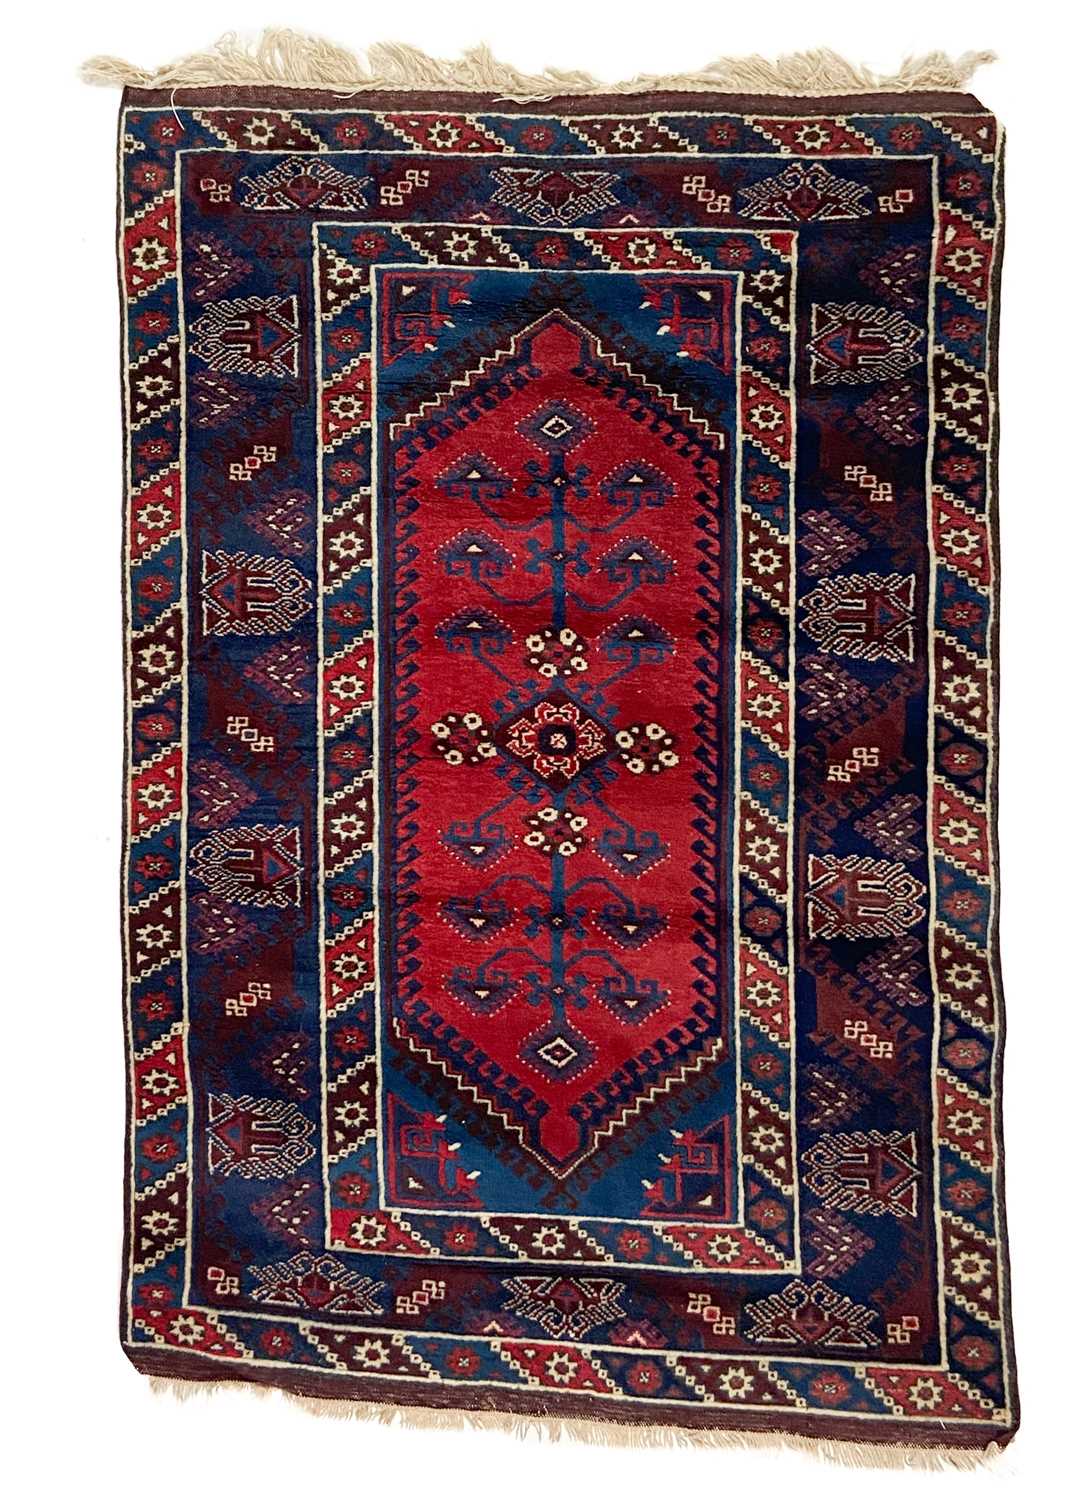 A Turkish Dosemealti rug, mid 20th century.